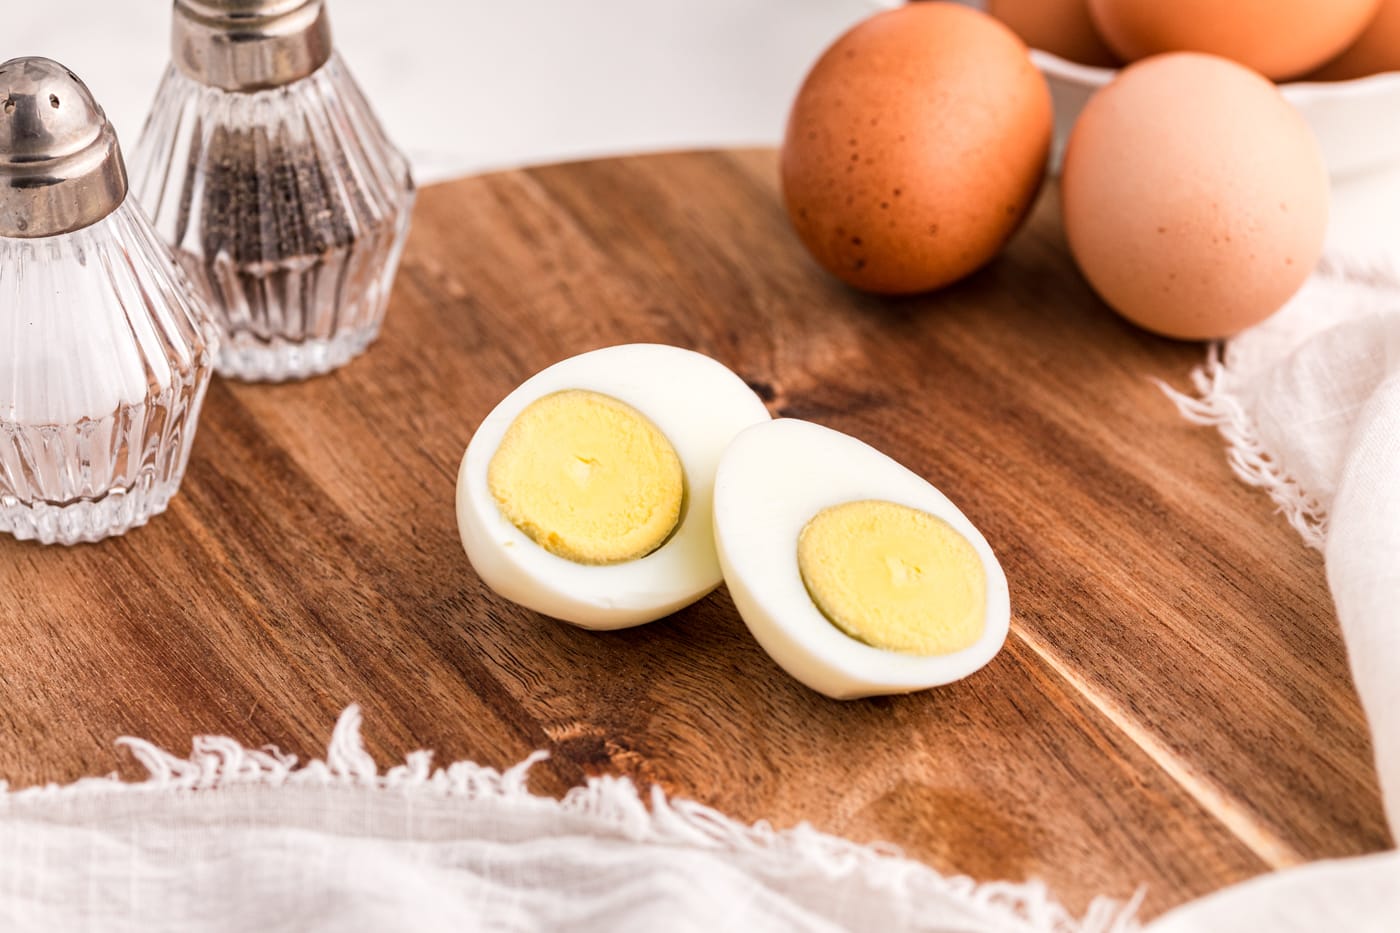 https://www.cleaneatingkitchen.com/wp-content/uploads/2022/01/crockpot-hard-boiled-eggs-hero.jpg